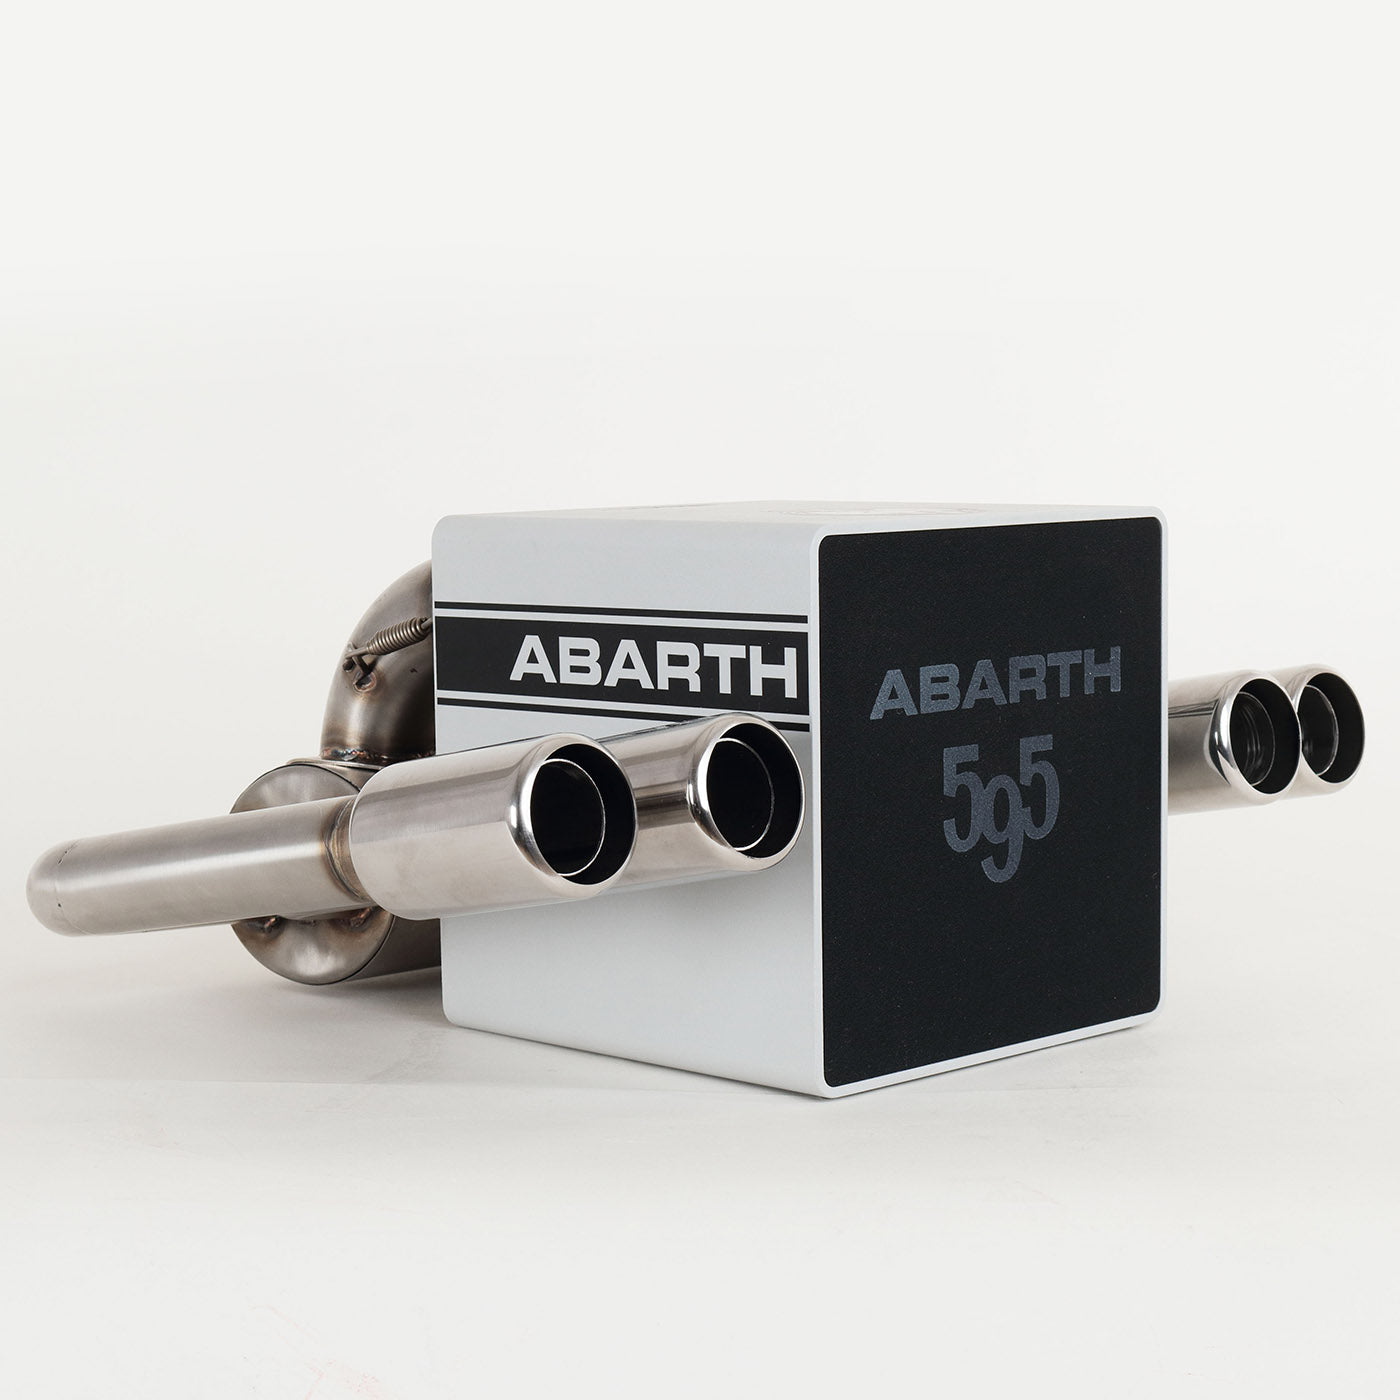 Kubo Abarth 595 Hi-Fi Speaker - Alternative view 1